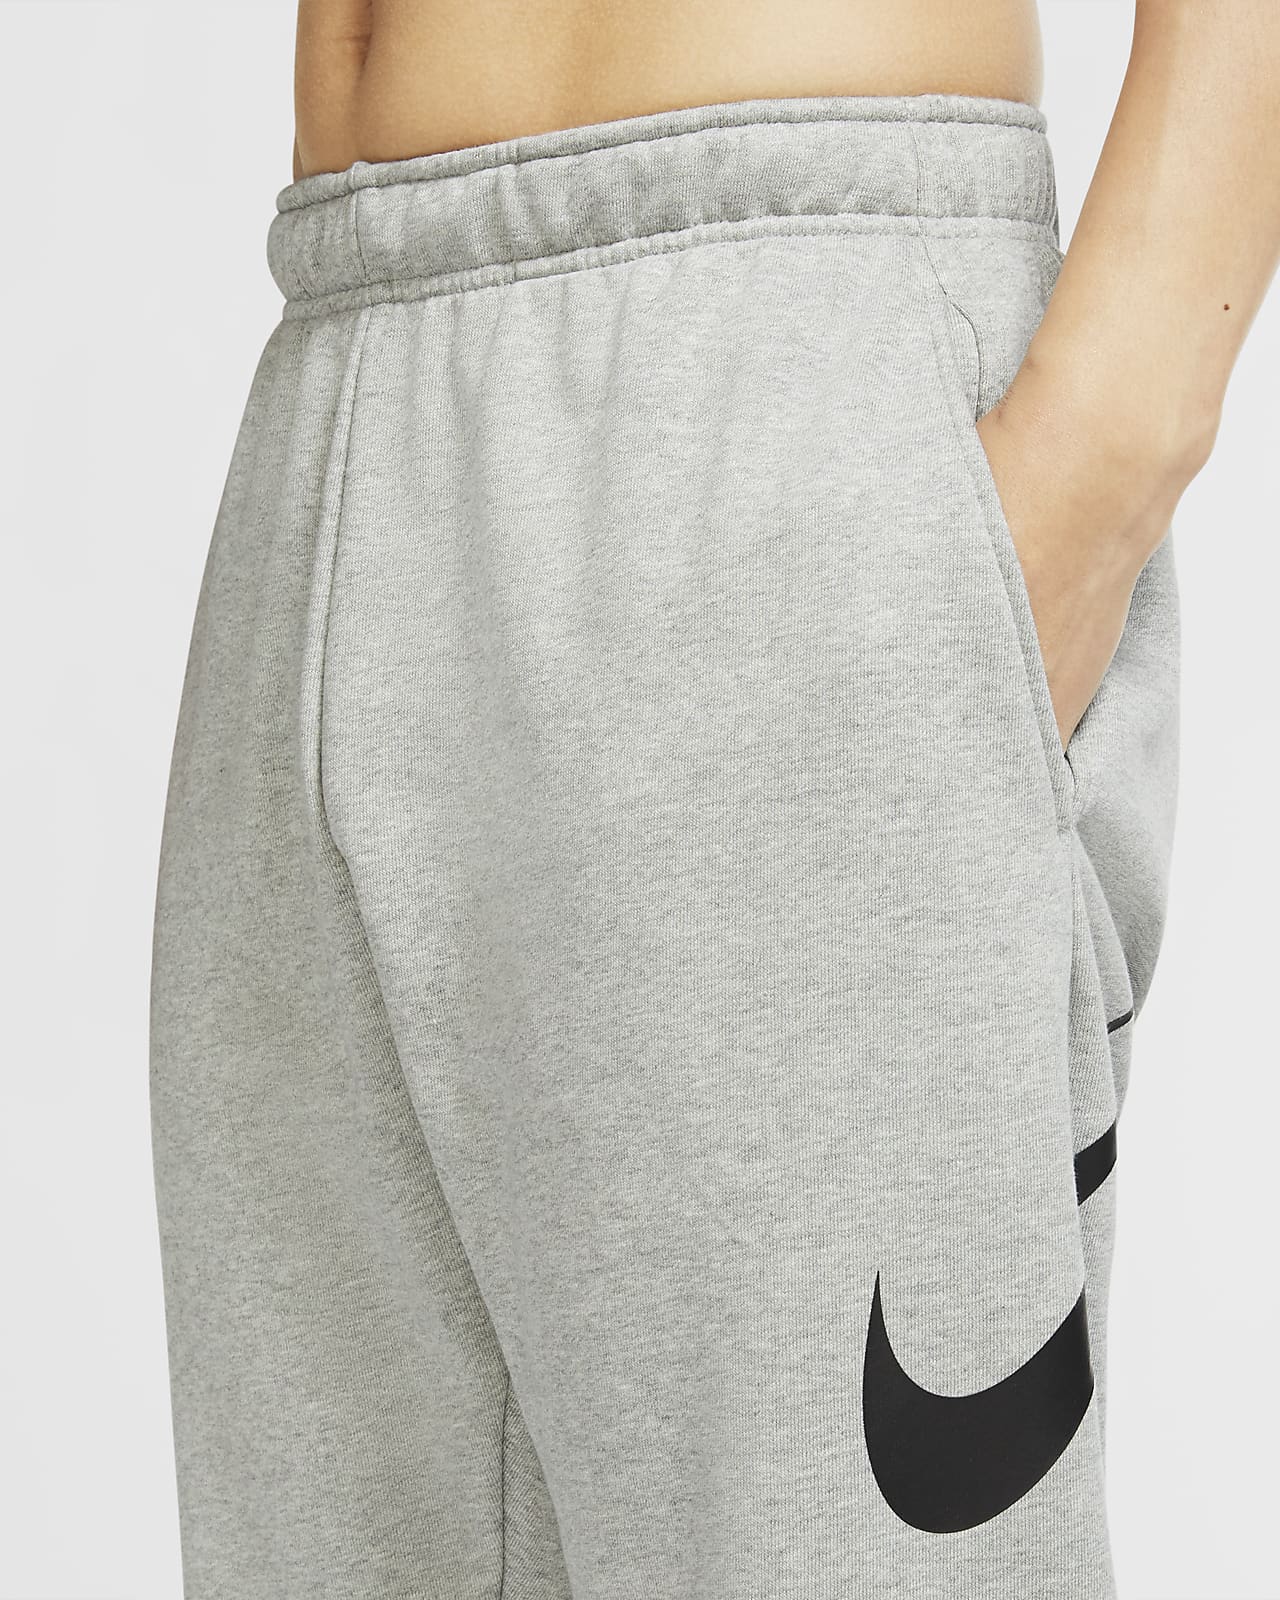 Nike Yoga Dri-FIT Men's Training Pants (Medium, Black/Heather) at